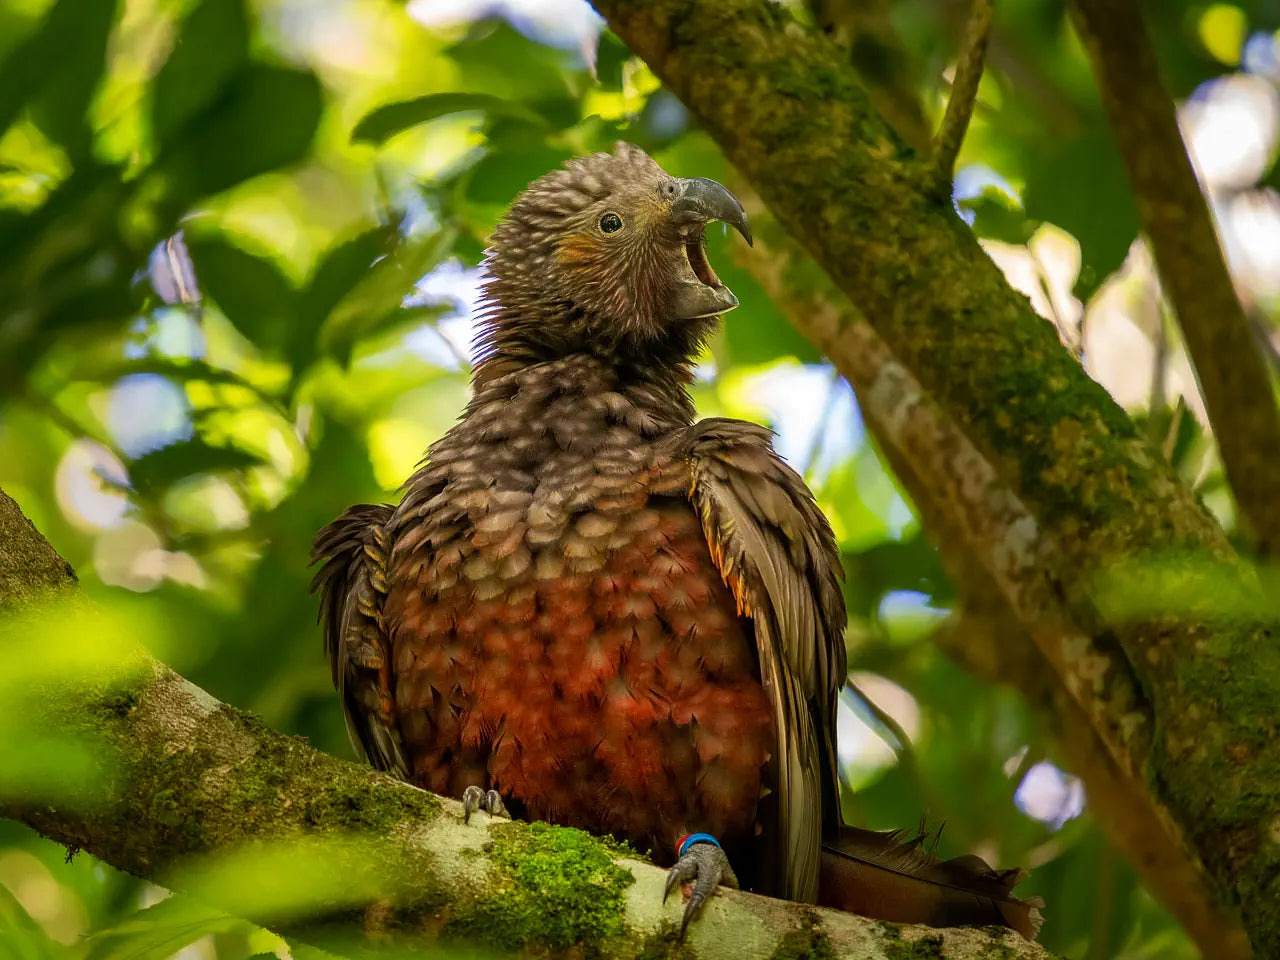 Kaka fledgling on a branch calling